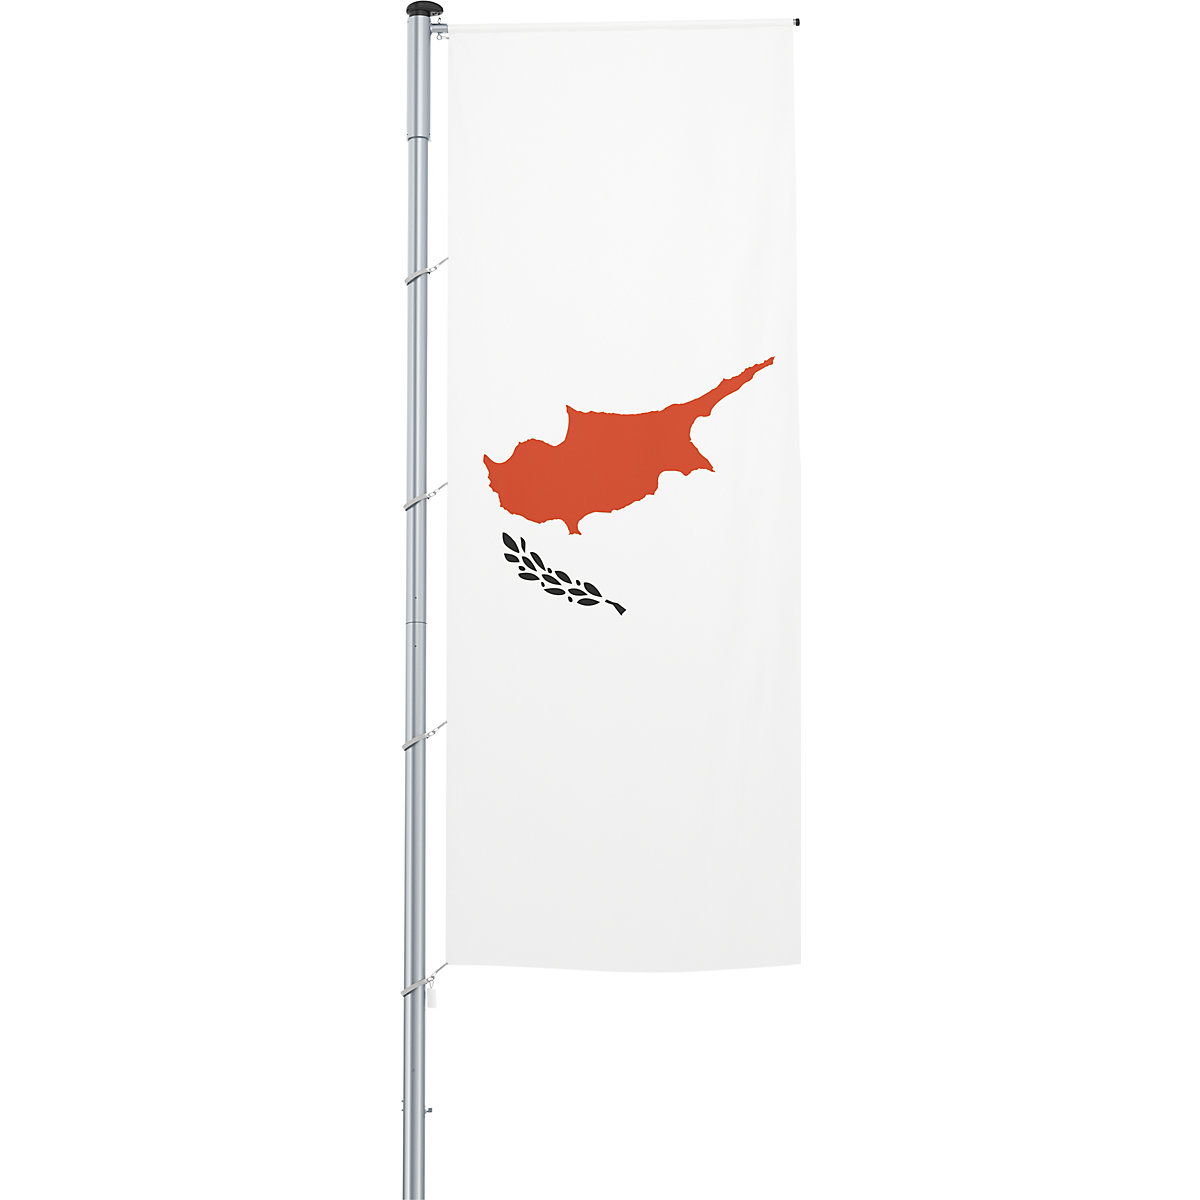 Steag pentru braț/drapel național – Mannus, format 1,2 x 3 m, Cipru-19